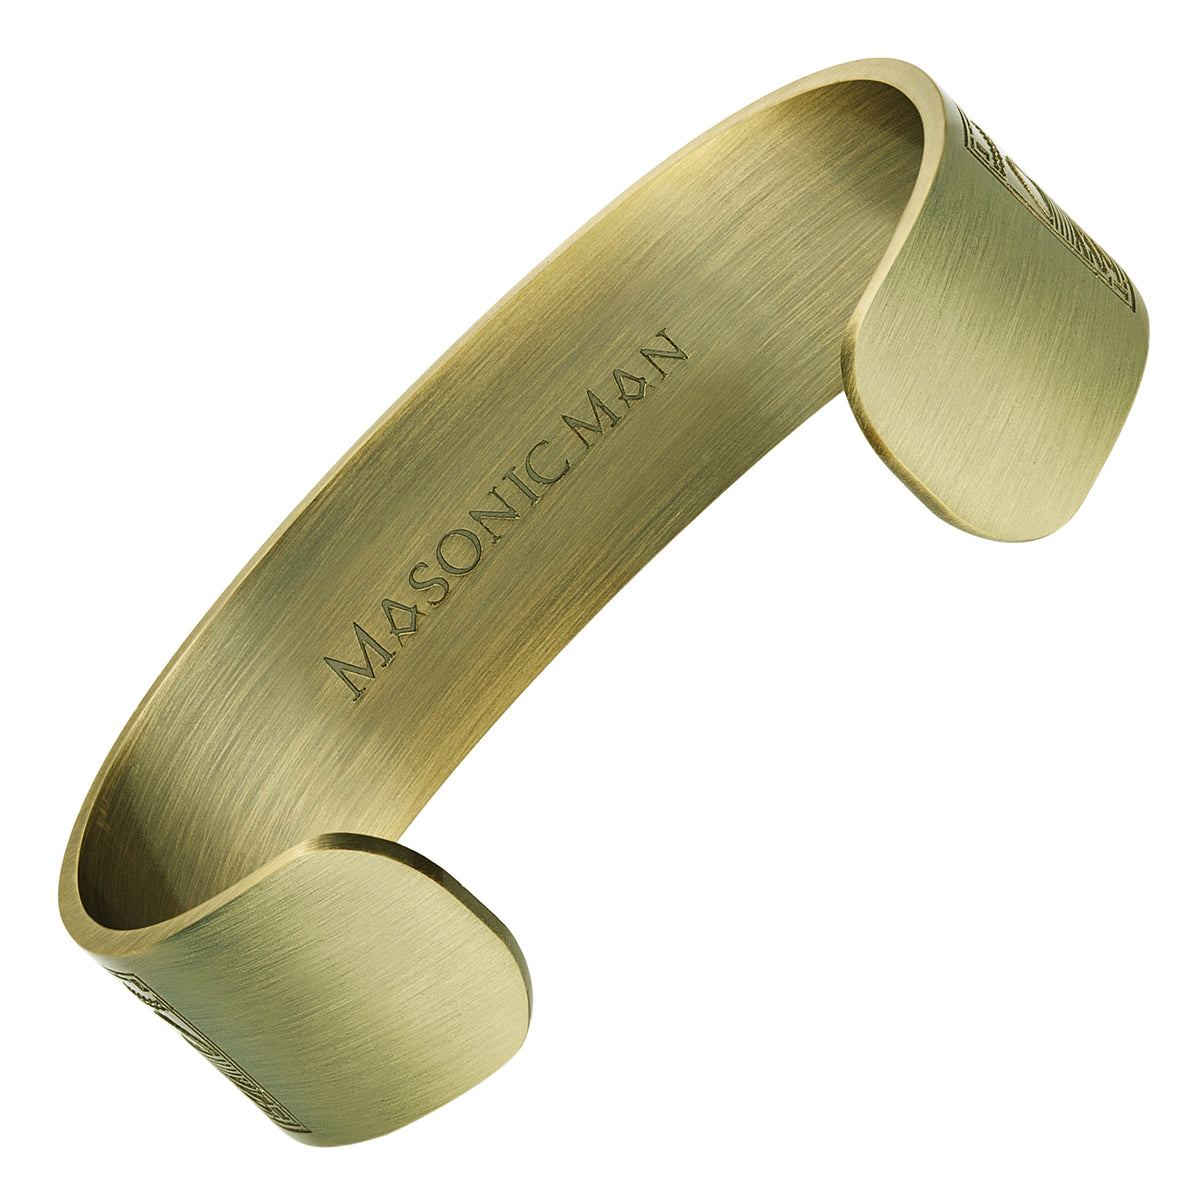 MasonicMan S&amp;C on Bible Pure Copper Bangle Bracelet - Antique Gold Finish